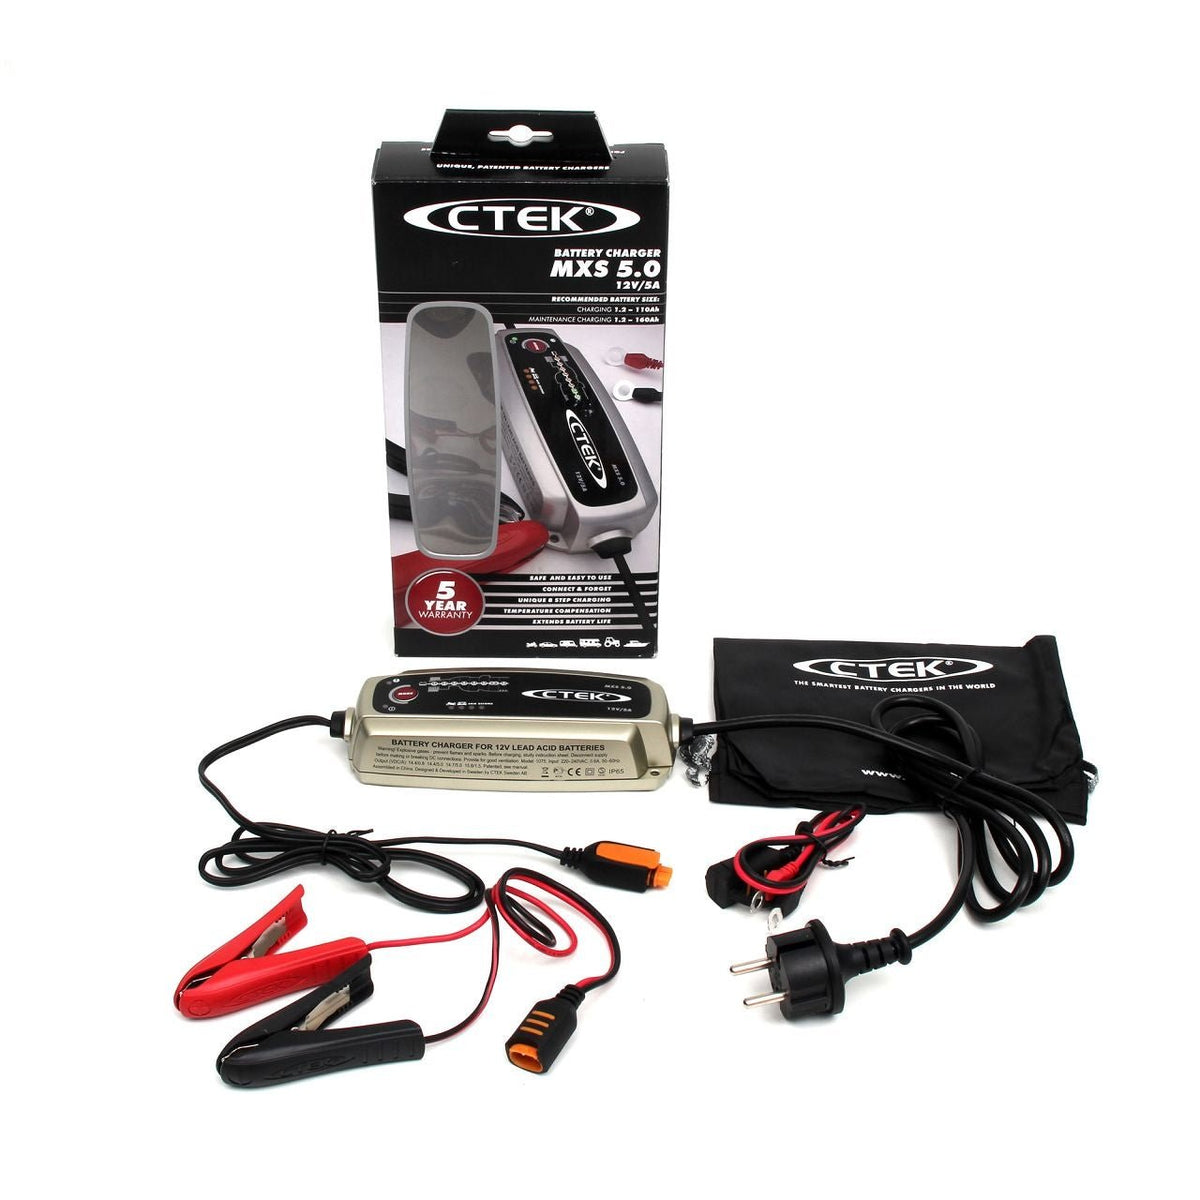 CTEK MXS 5.0 battery charger - Practical Caravan